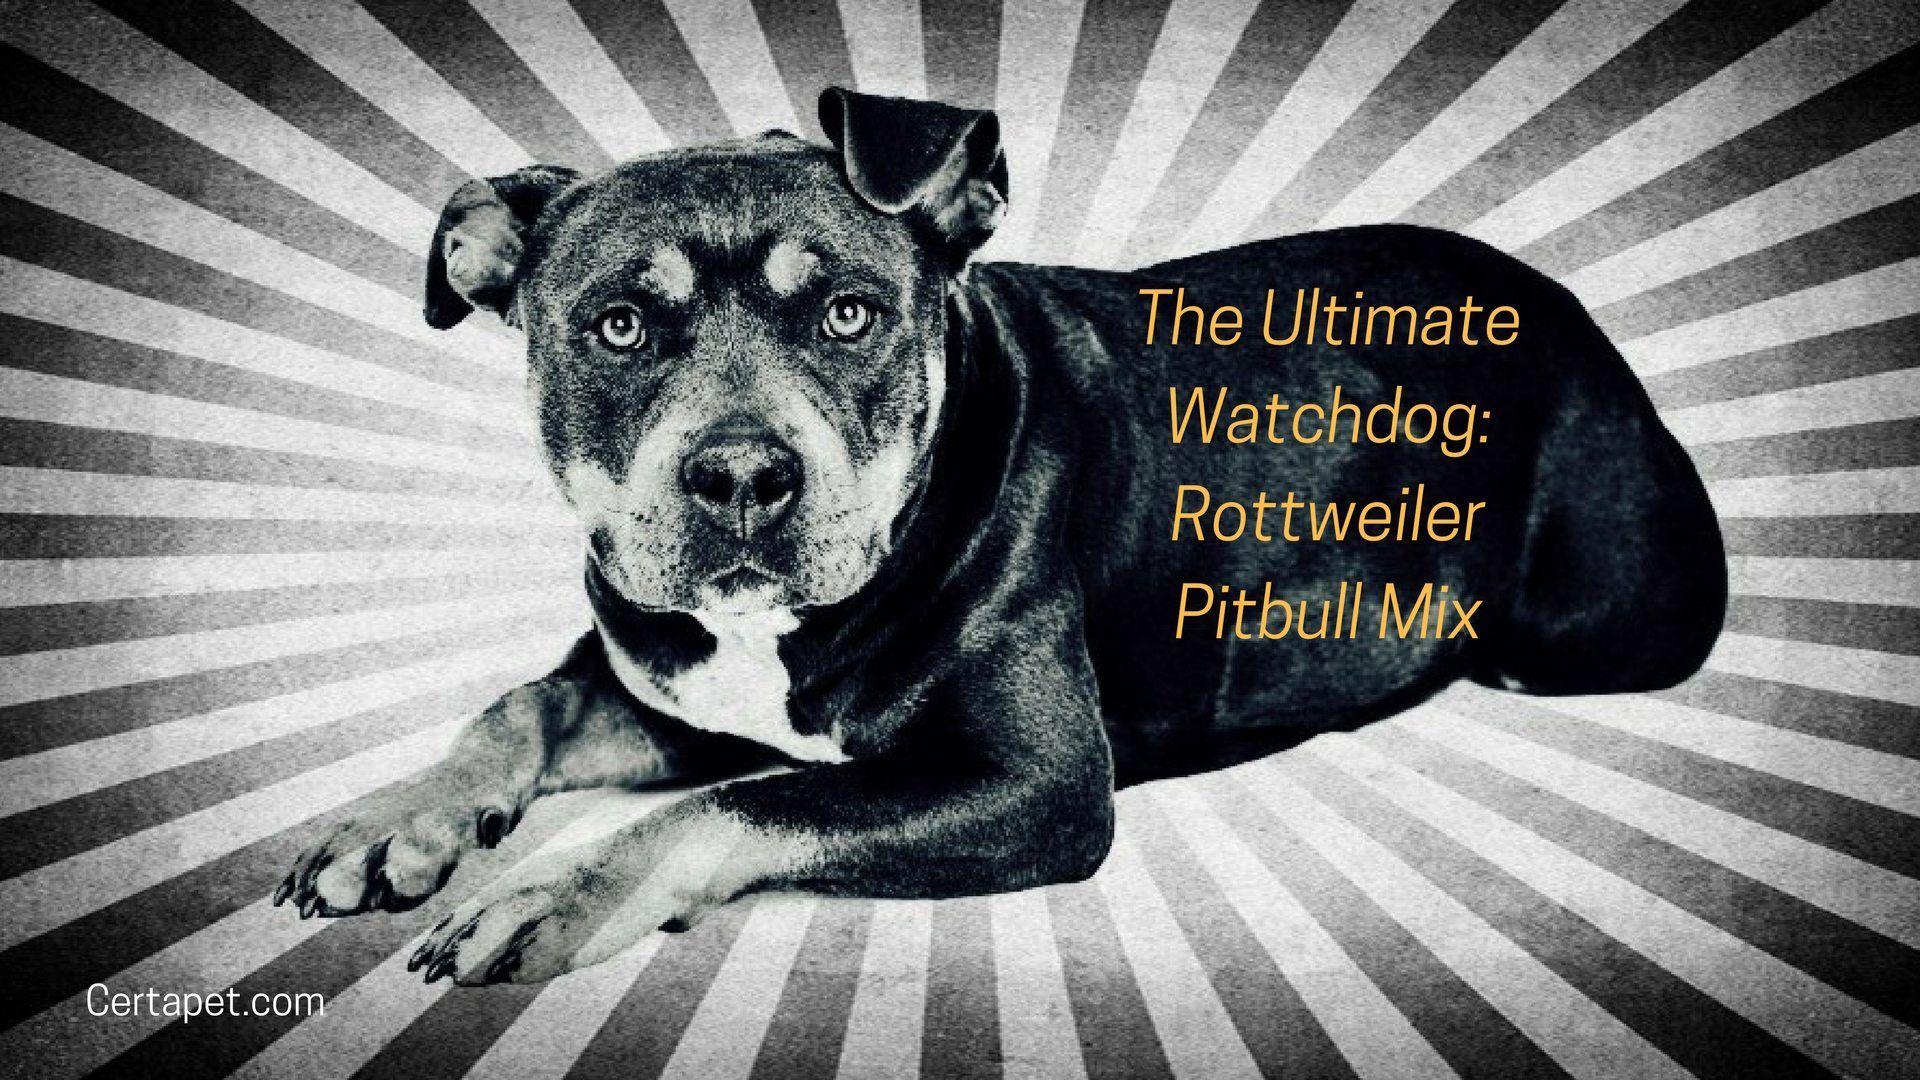 Rottweiler Pitbull Mix: The Ultimate Watchdog